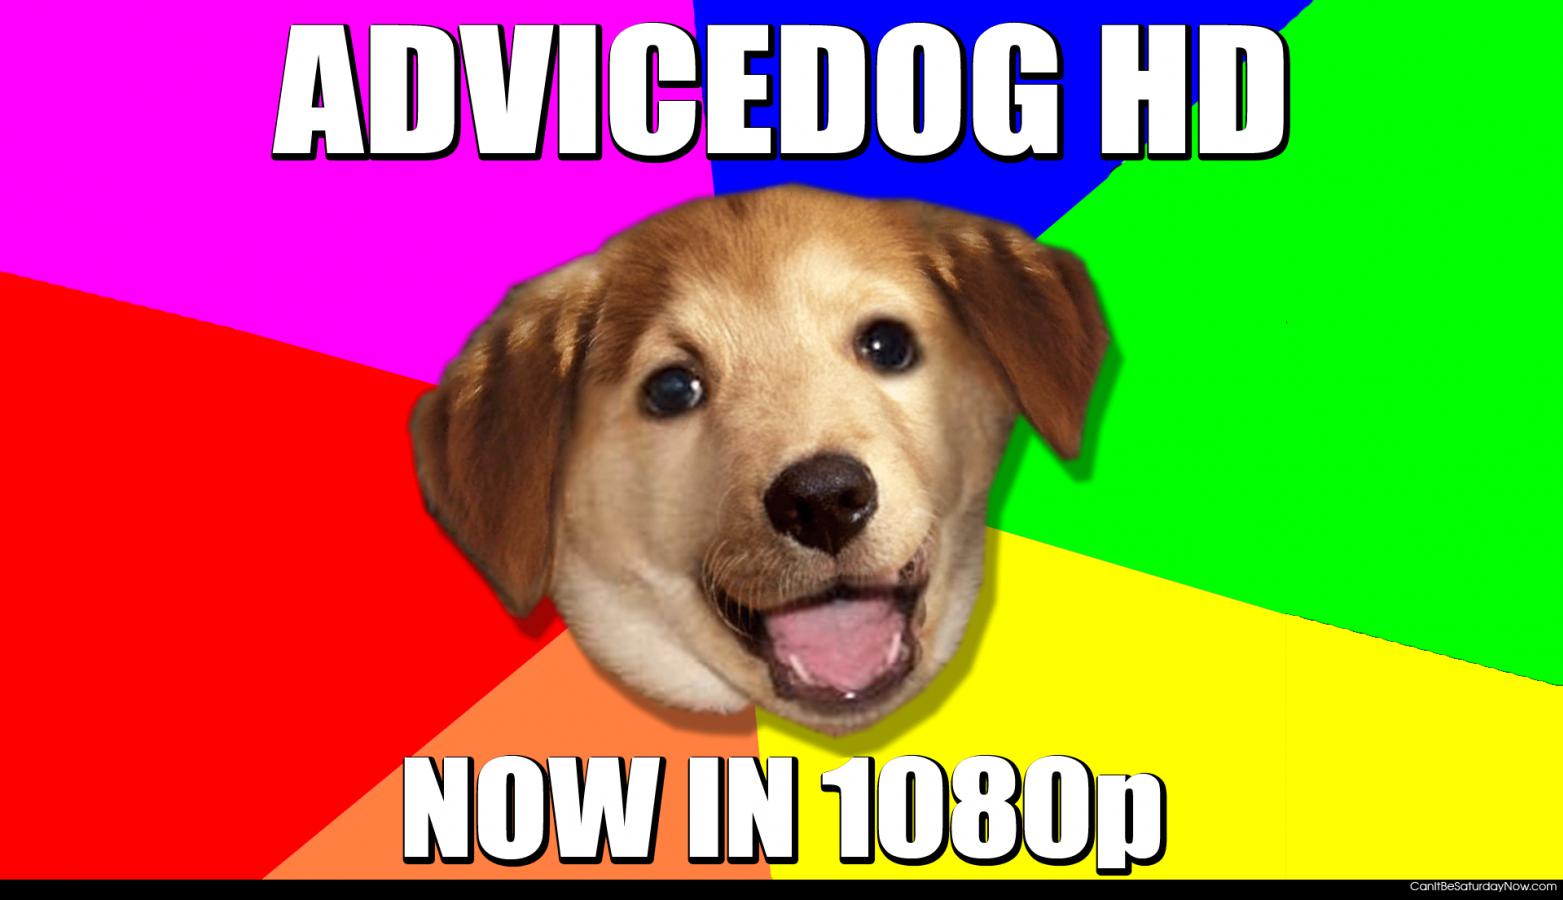 Advice dog in hd - 1080P Worth of advice